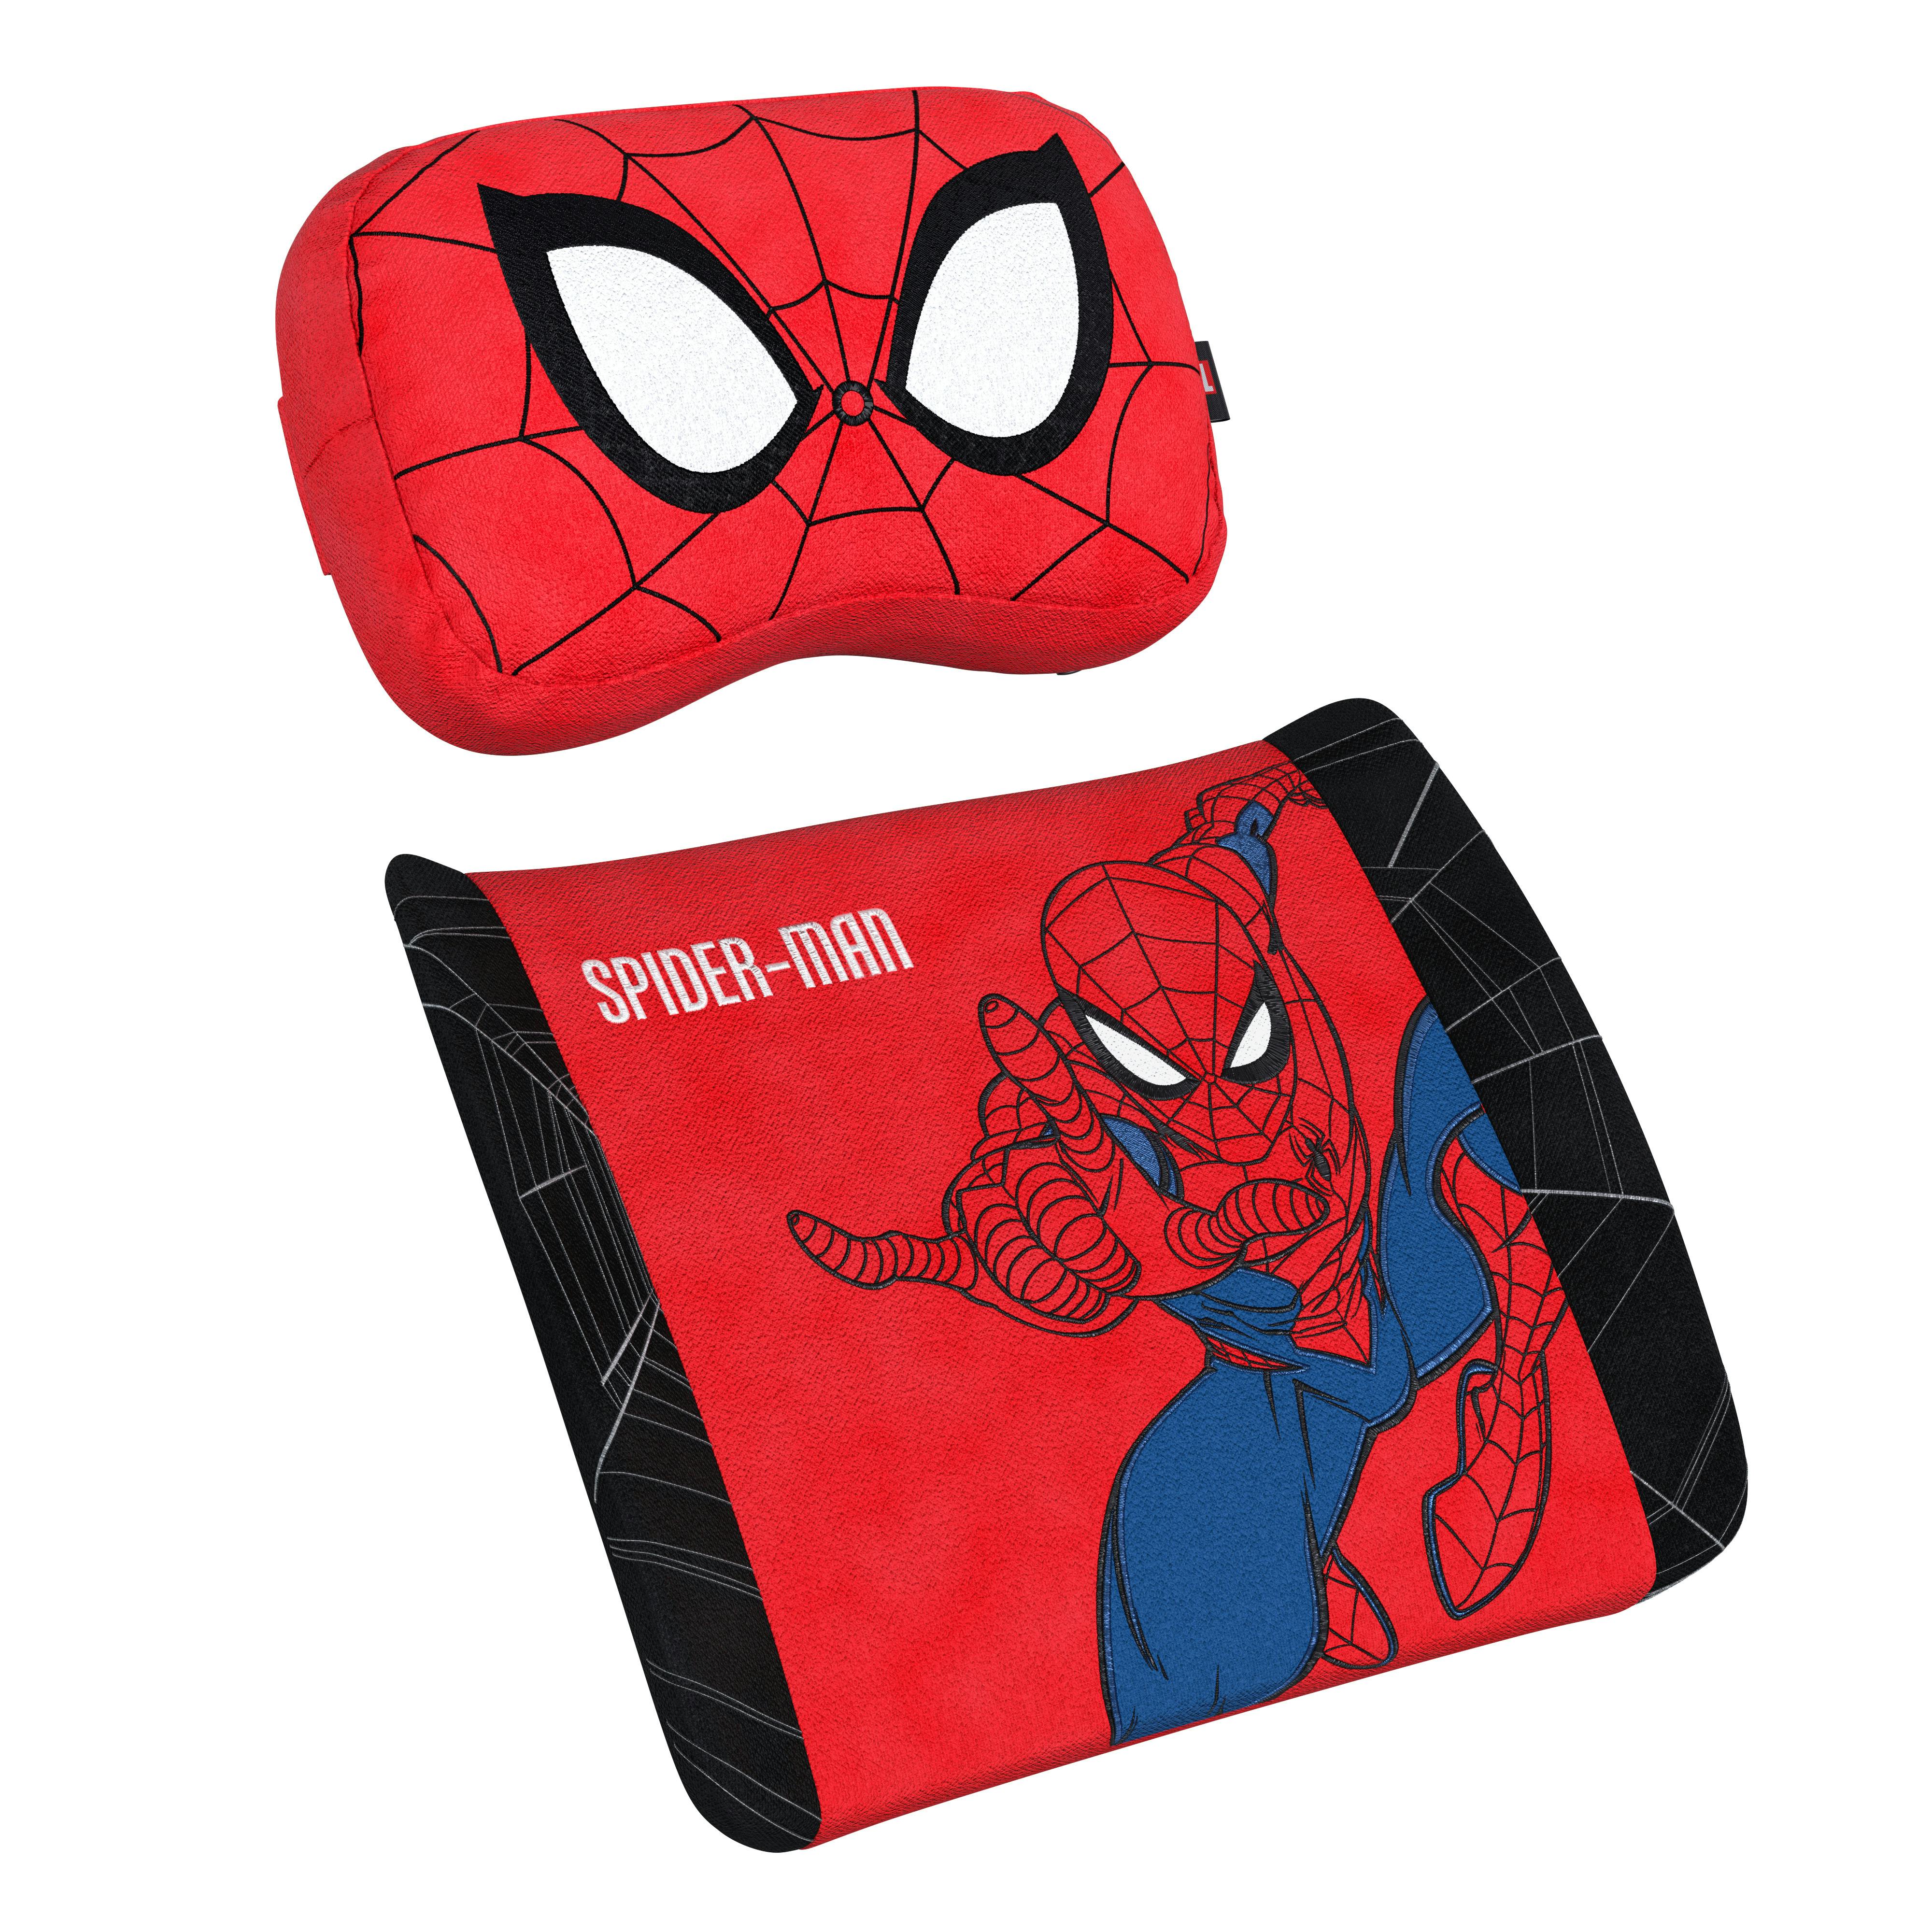 noblechairs - Memory Foam Pillow Set - Spider-Man Edition